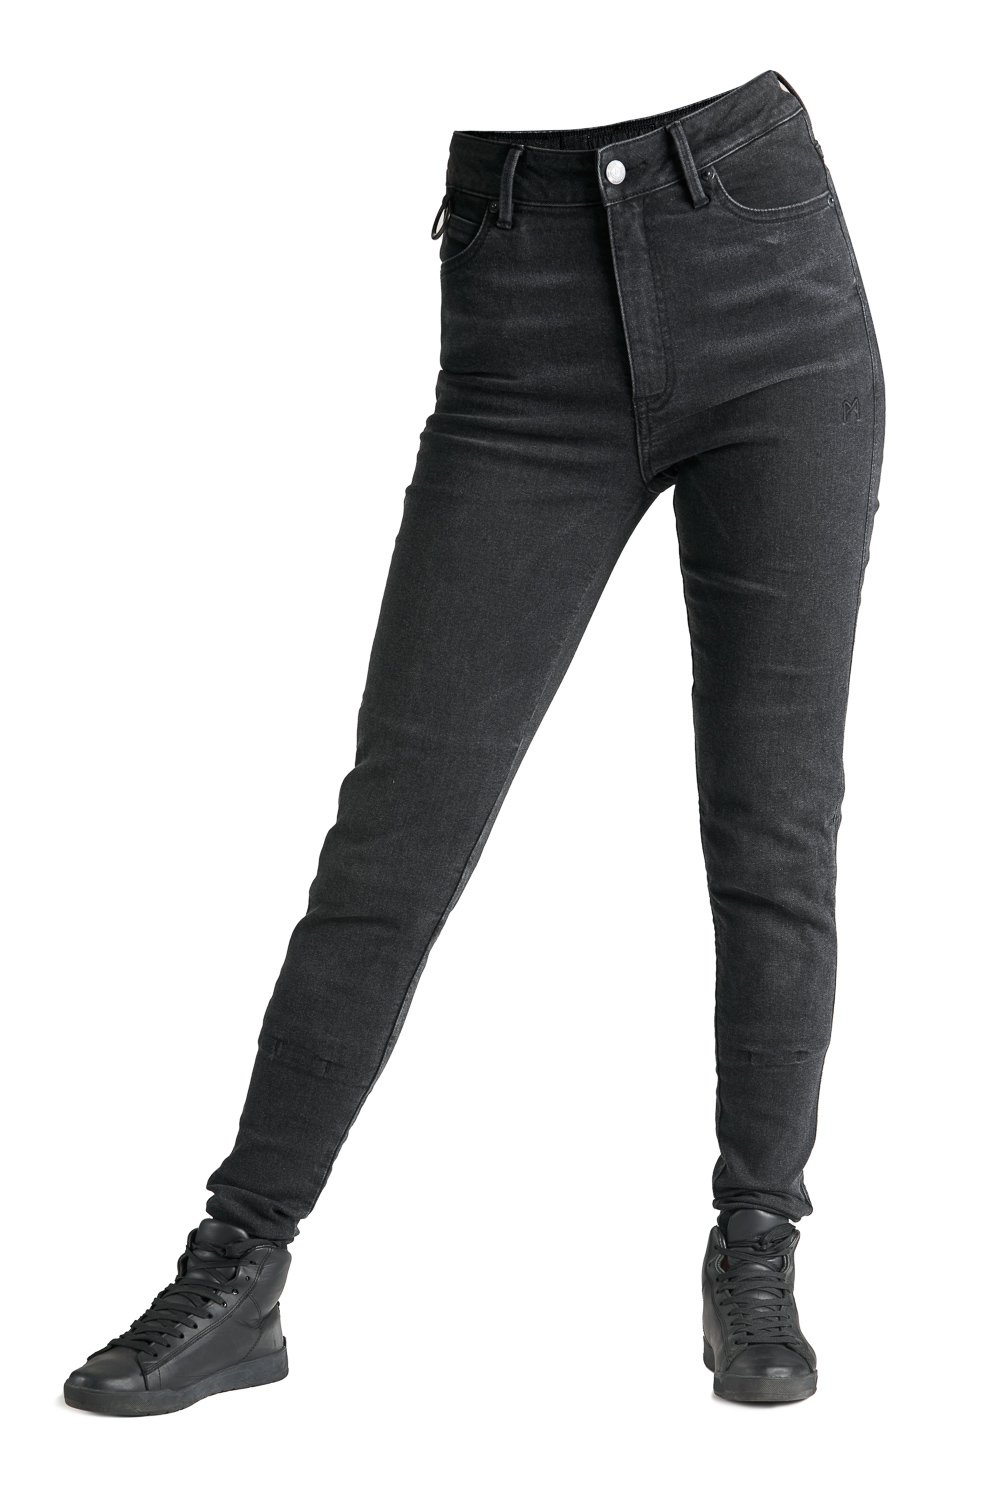 Image of Pando Moto Kusari Cor 01 Women Motorcycle Jeans Skinny-Fit Cordura Size W32/L32 EN